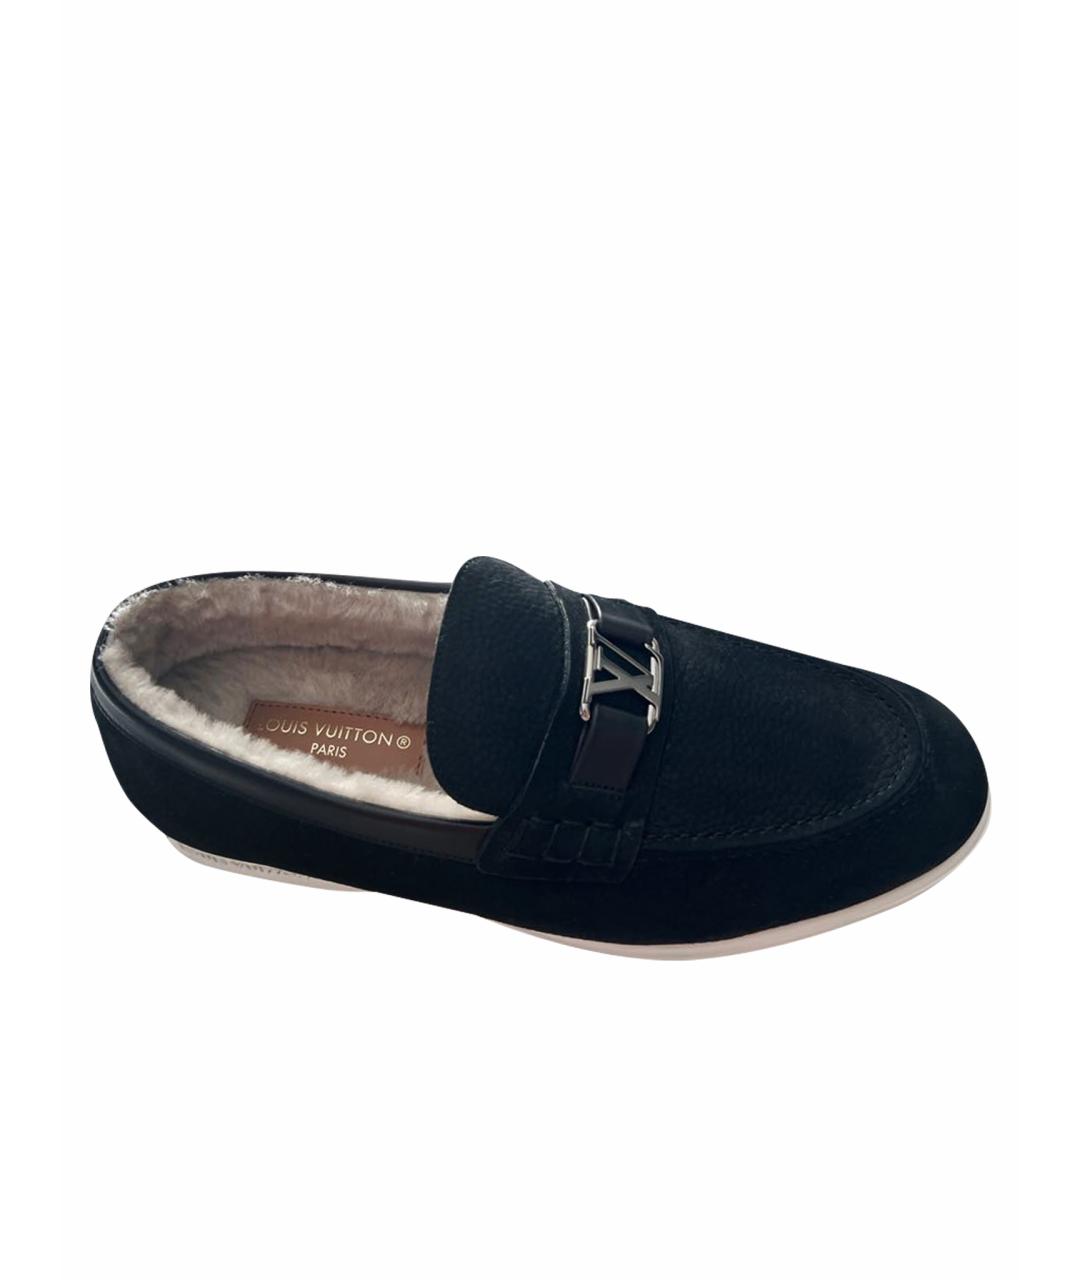 LOUIS VUITTON PRE-OWNED Черные нубуковые низкие ботинки, фото 1